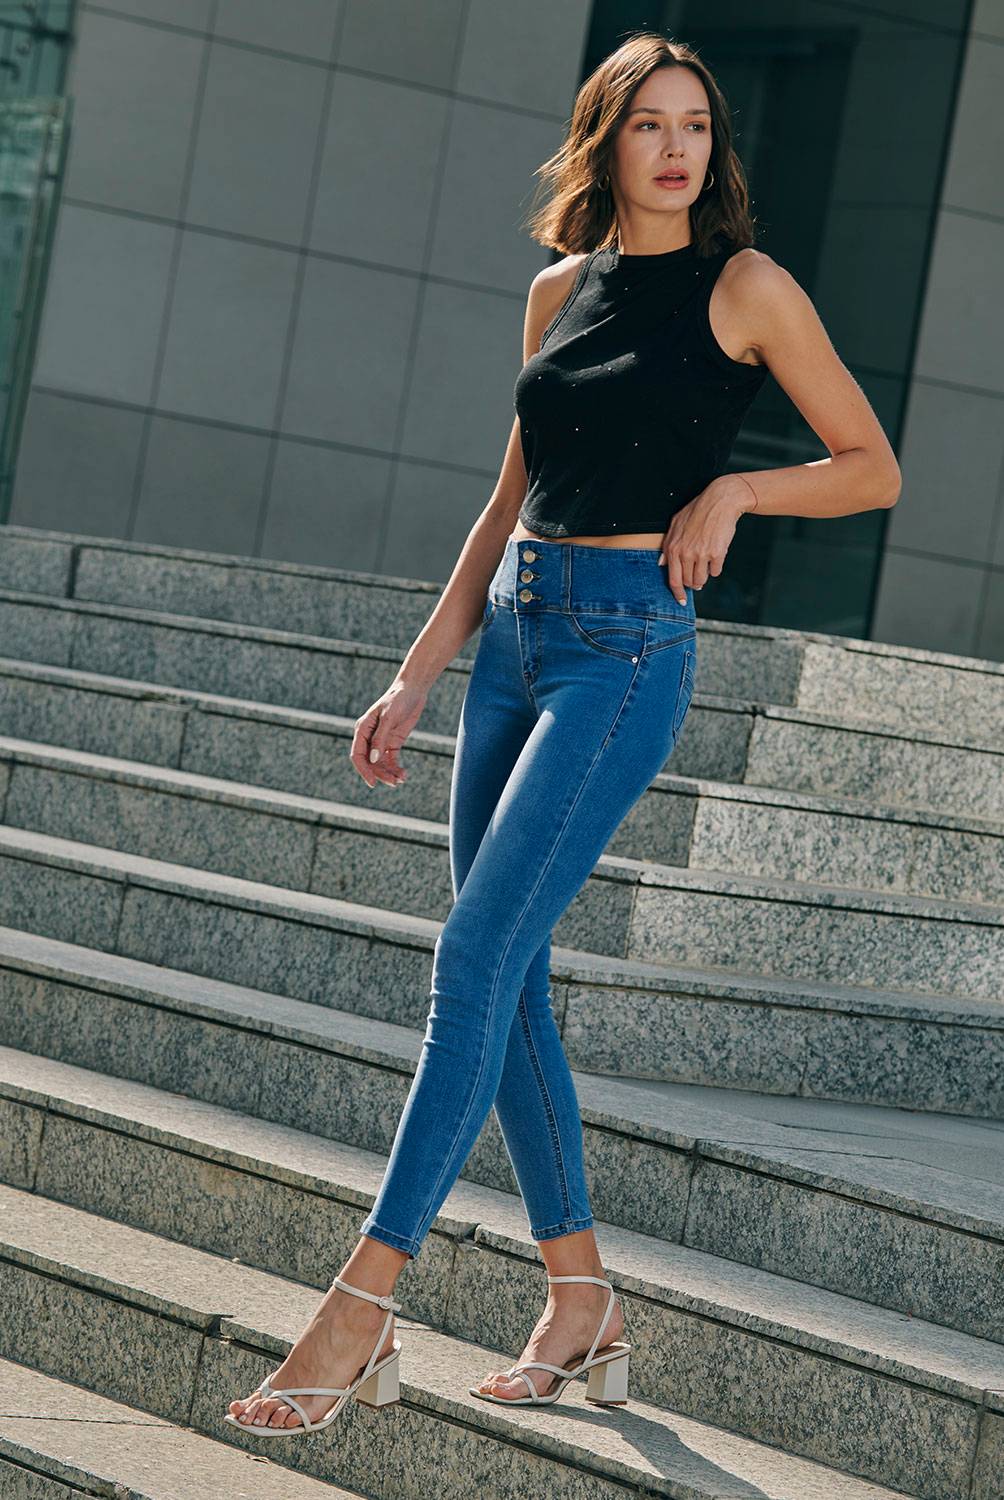 MOSSIMO - Jeans Skinny Push Up Tiro Alto Mujer Mossimo